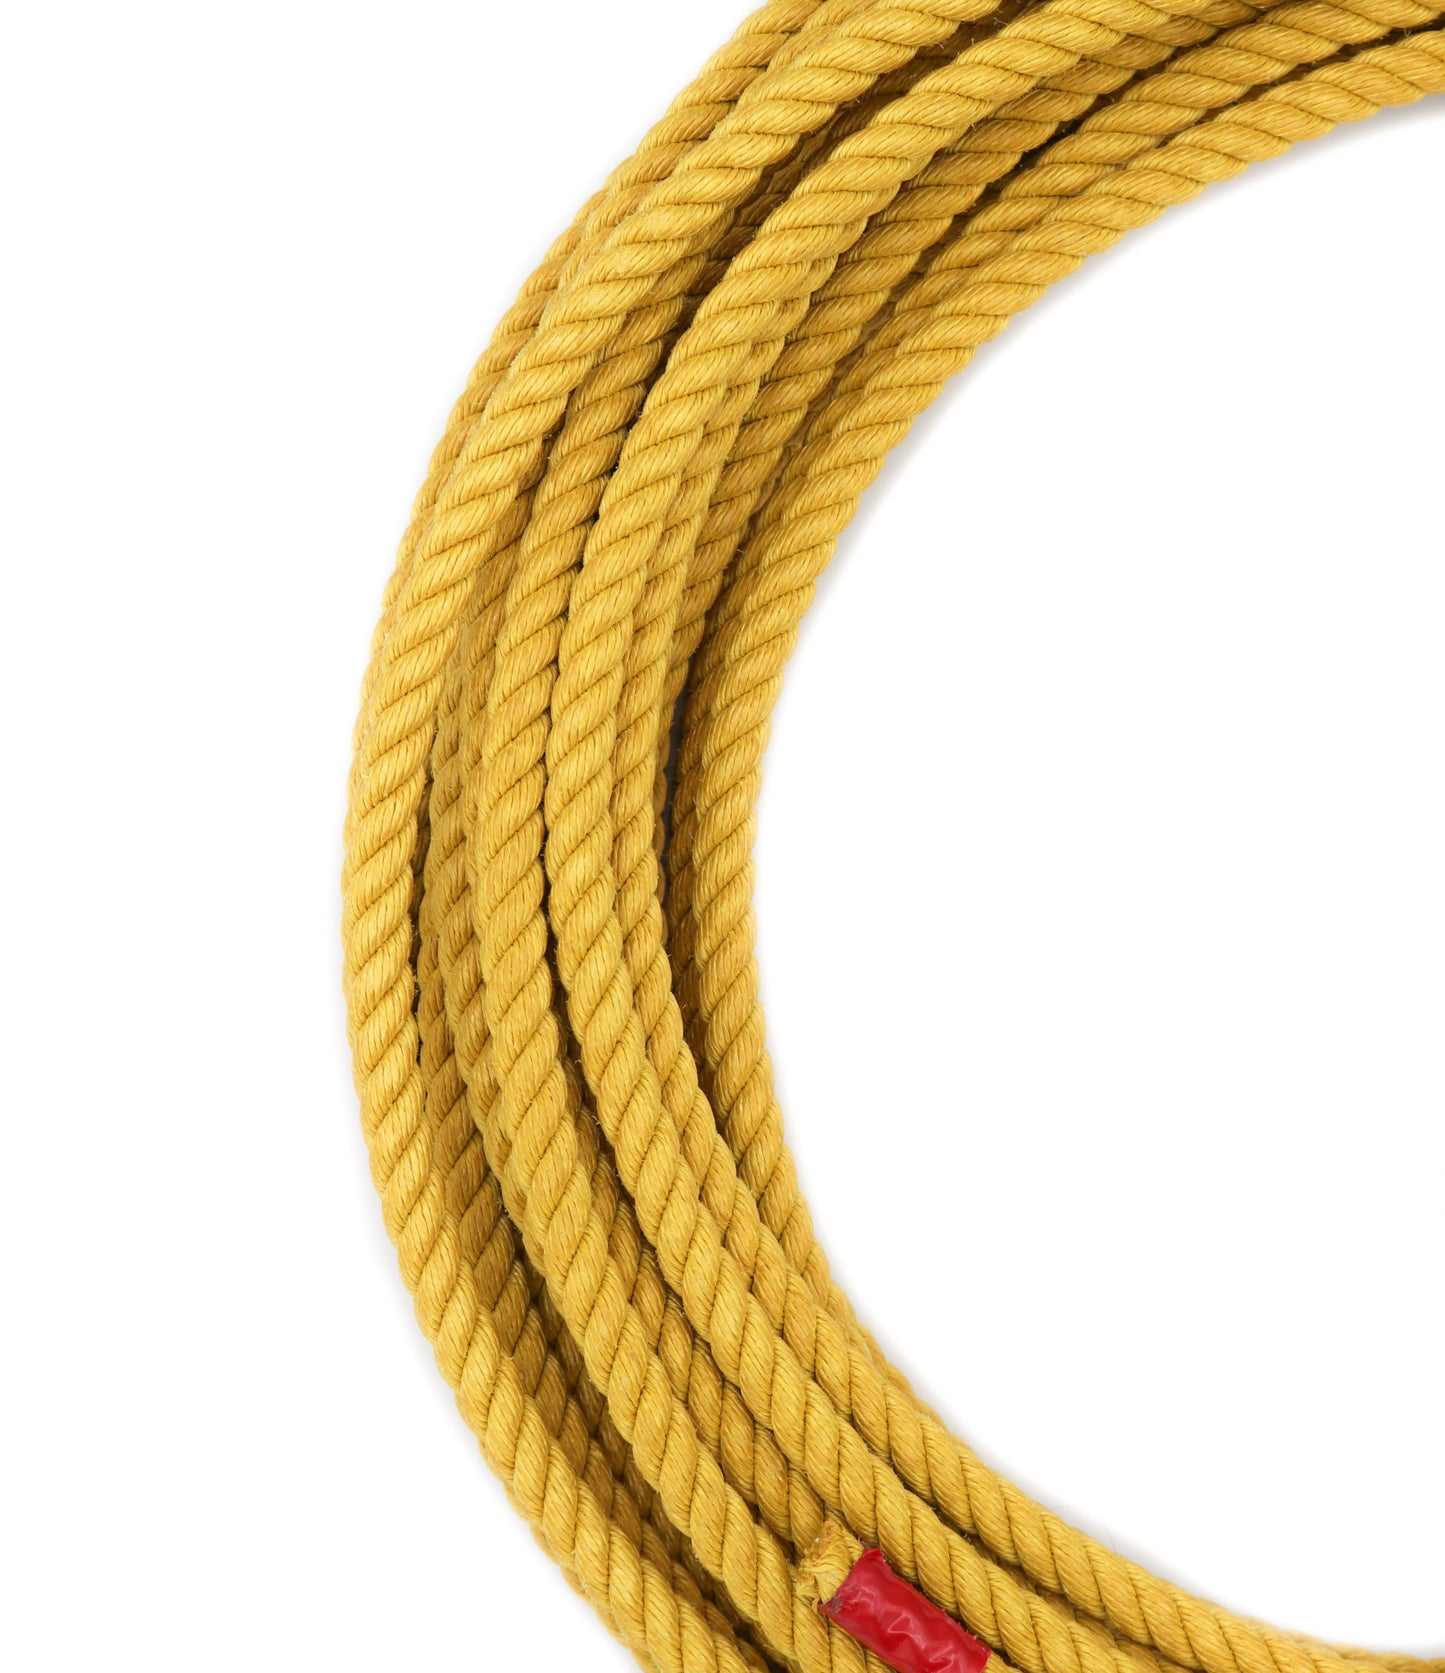 125Ft Gold Lead Core Lasso 11mm Rope Soga de Plomo